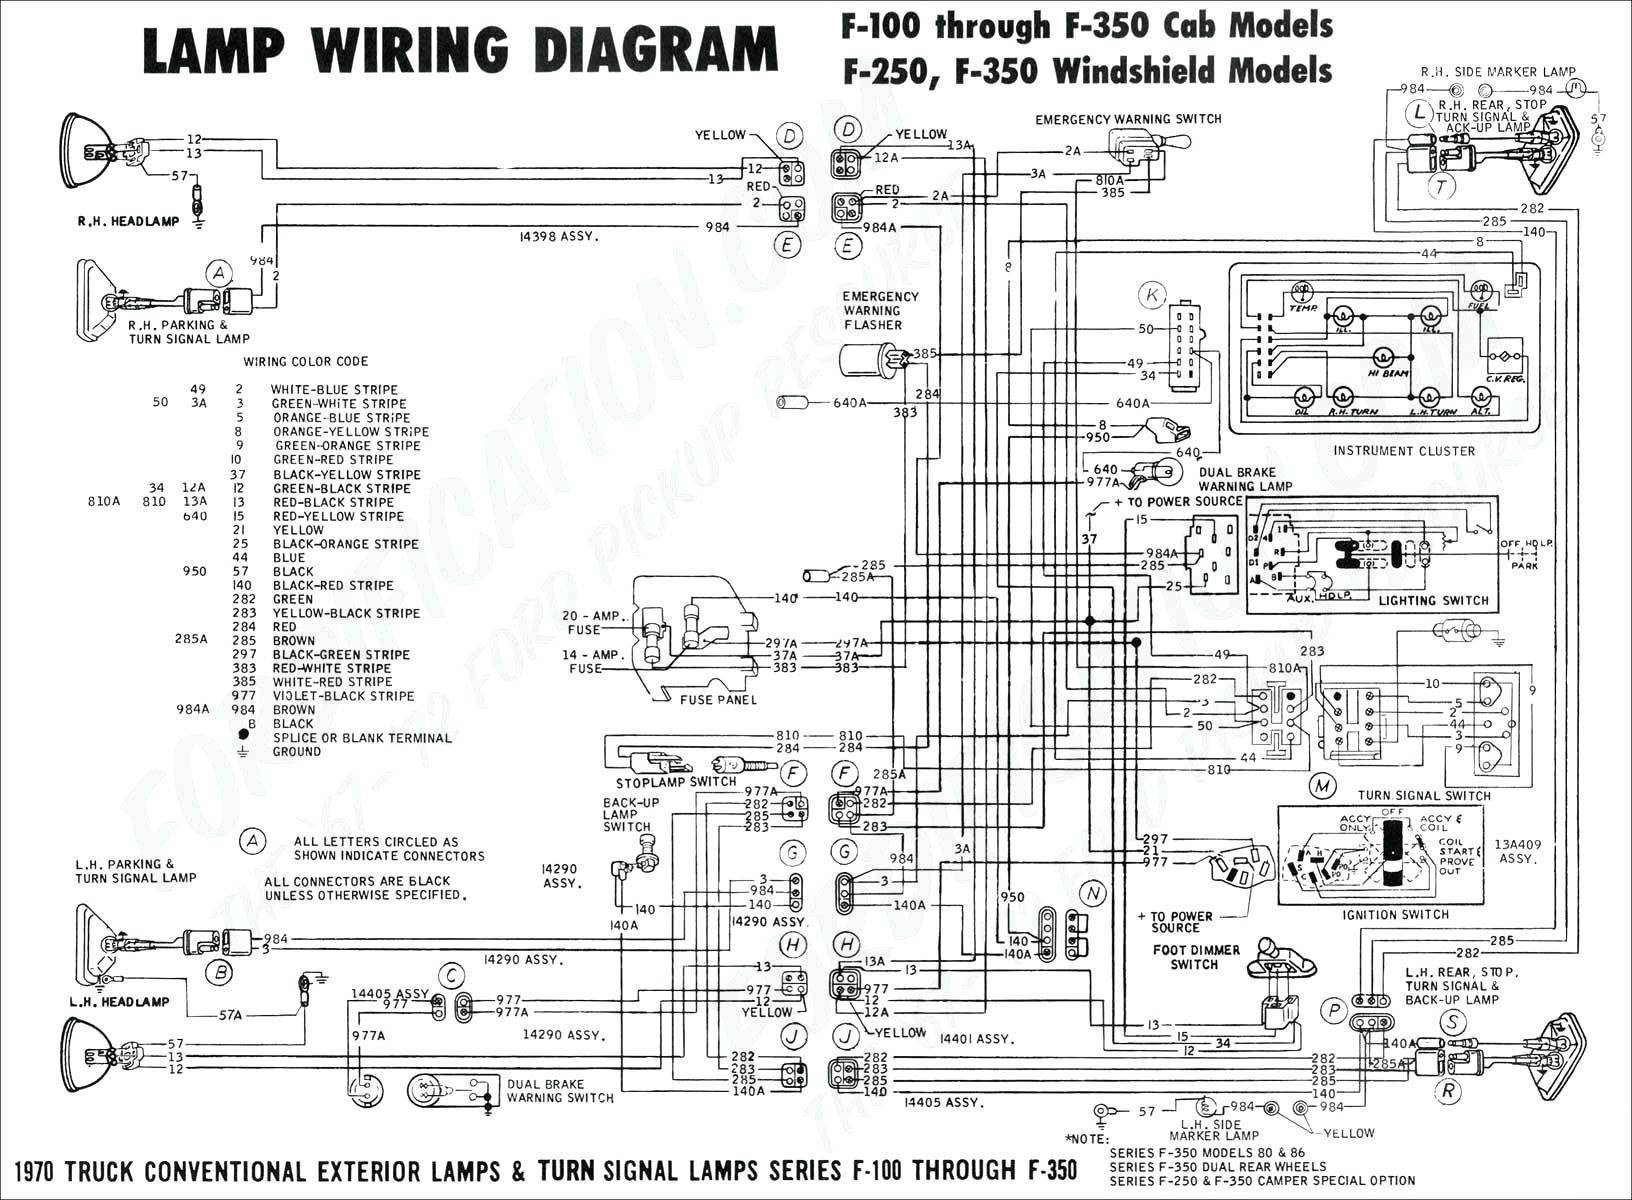 2018 Mercury 115 Prxs Ignition Switch Diagram 0d22f 1996 P30 Wiring Diagram Of 2018 Mercury 115 Prxs Ignition Switch Diagram